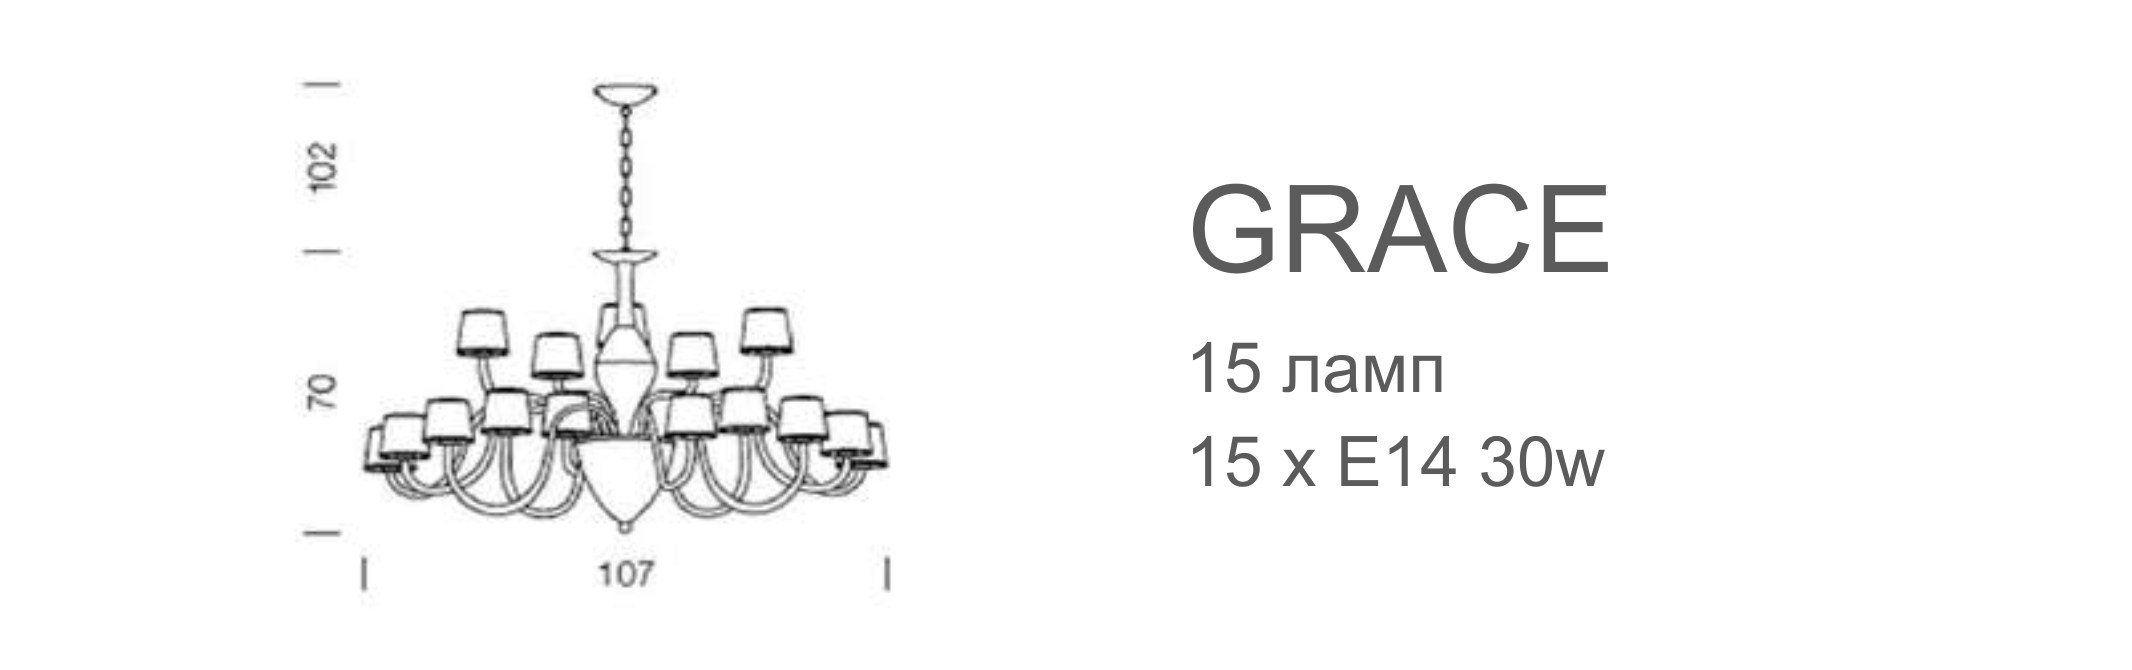 Люстра Grace - 15 ламп